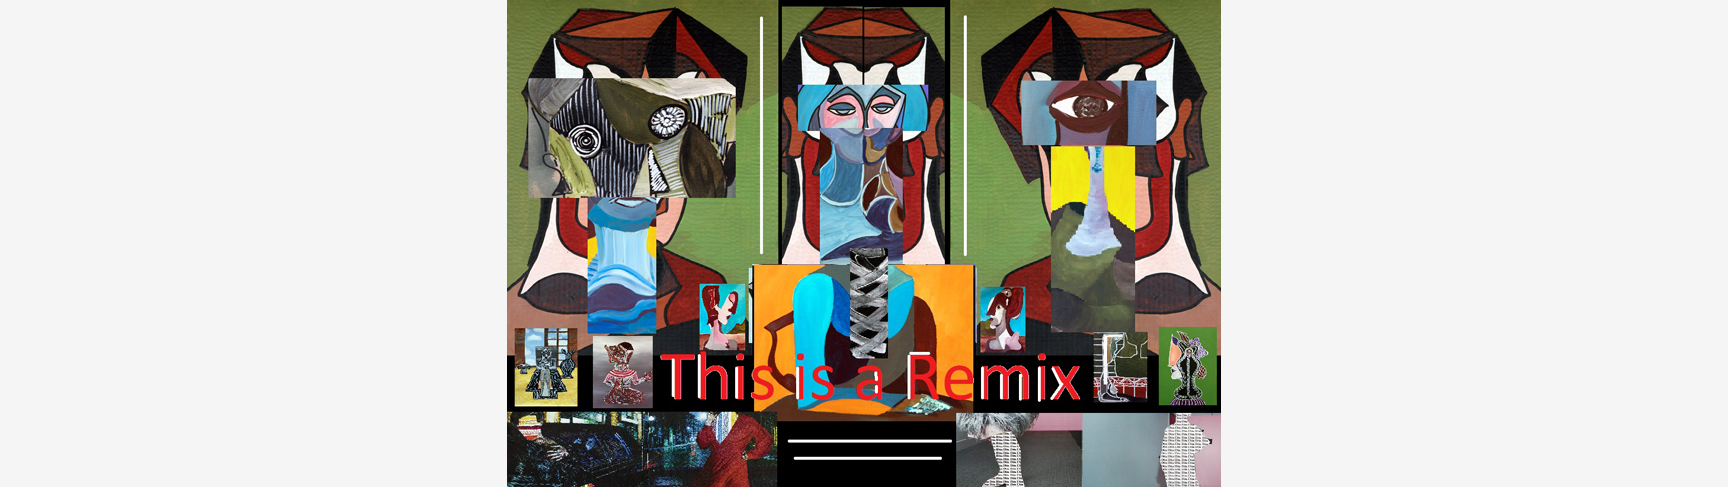 Remix_487